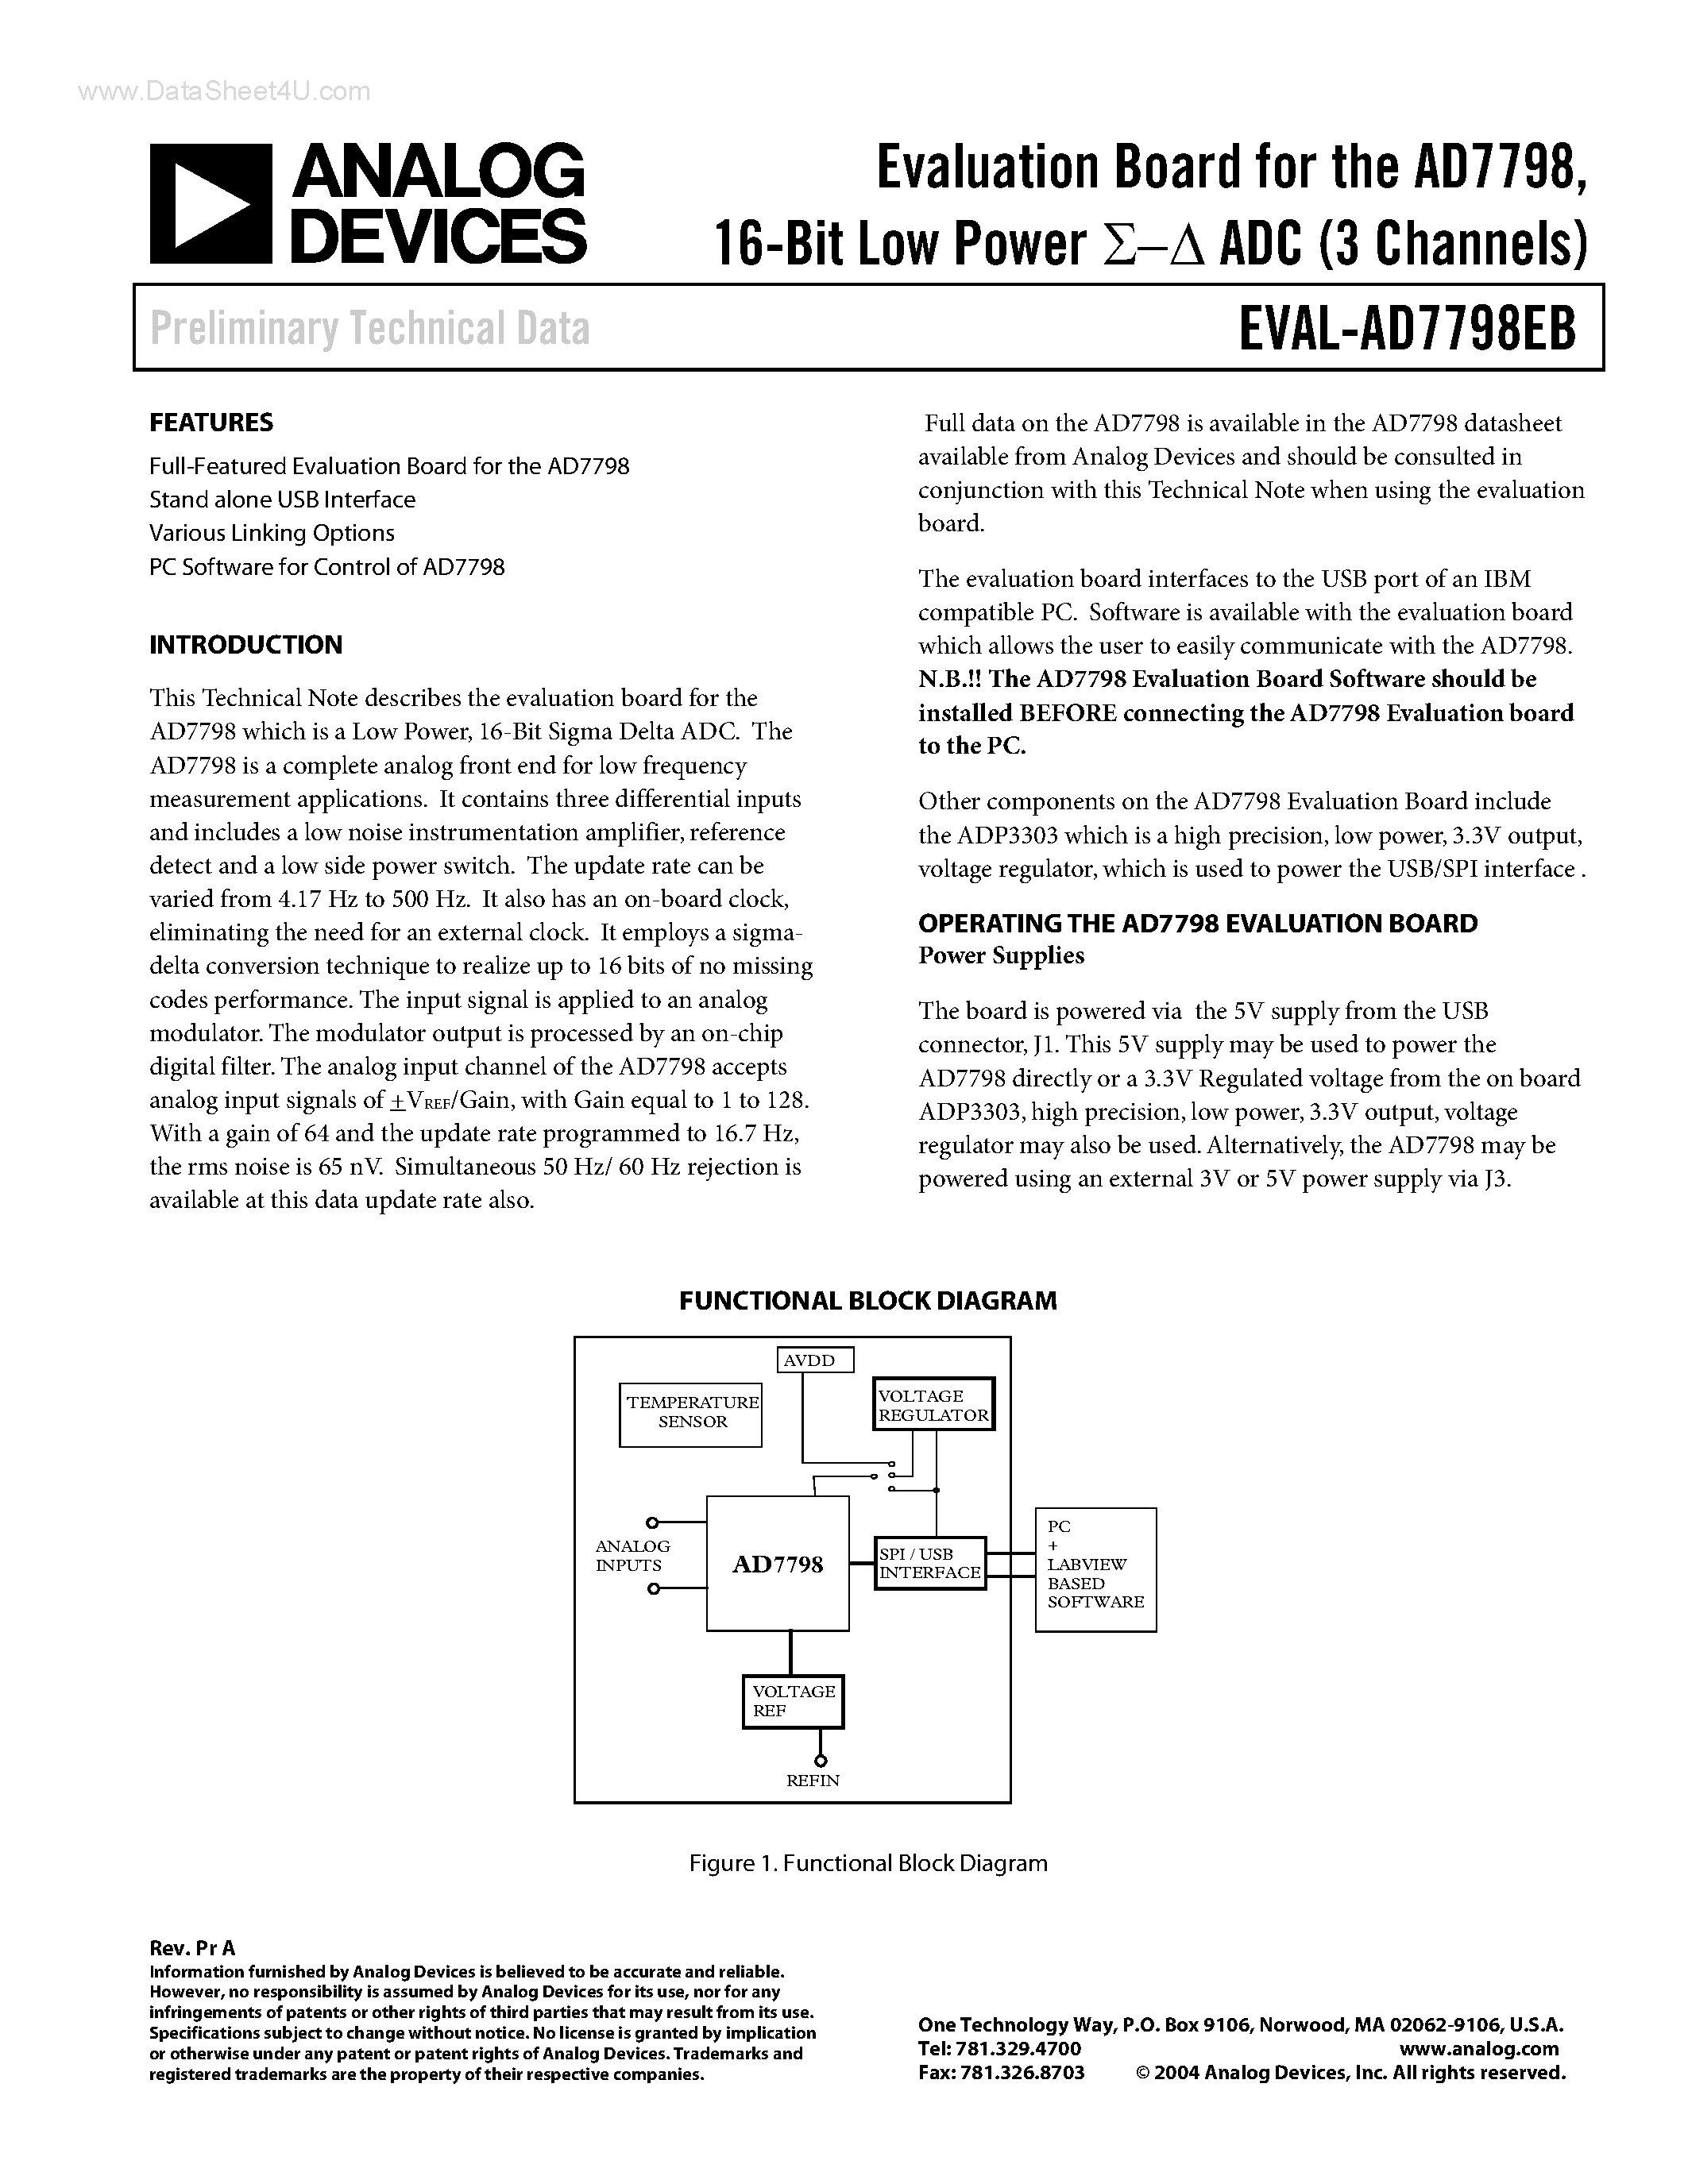 Даташит EVAL-AD7798EB - 16-Bit Low Power ADC страница 1